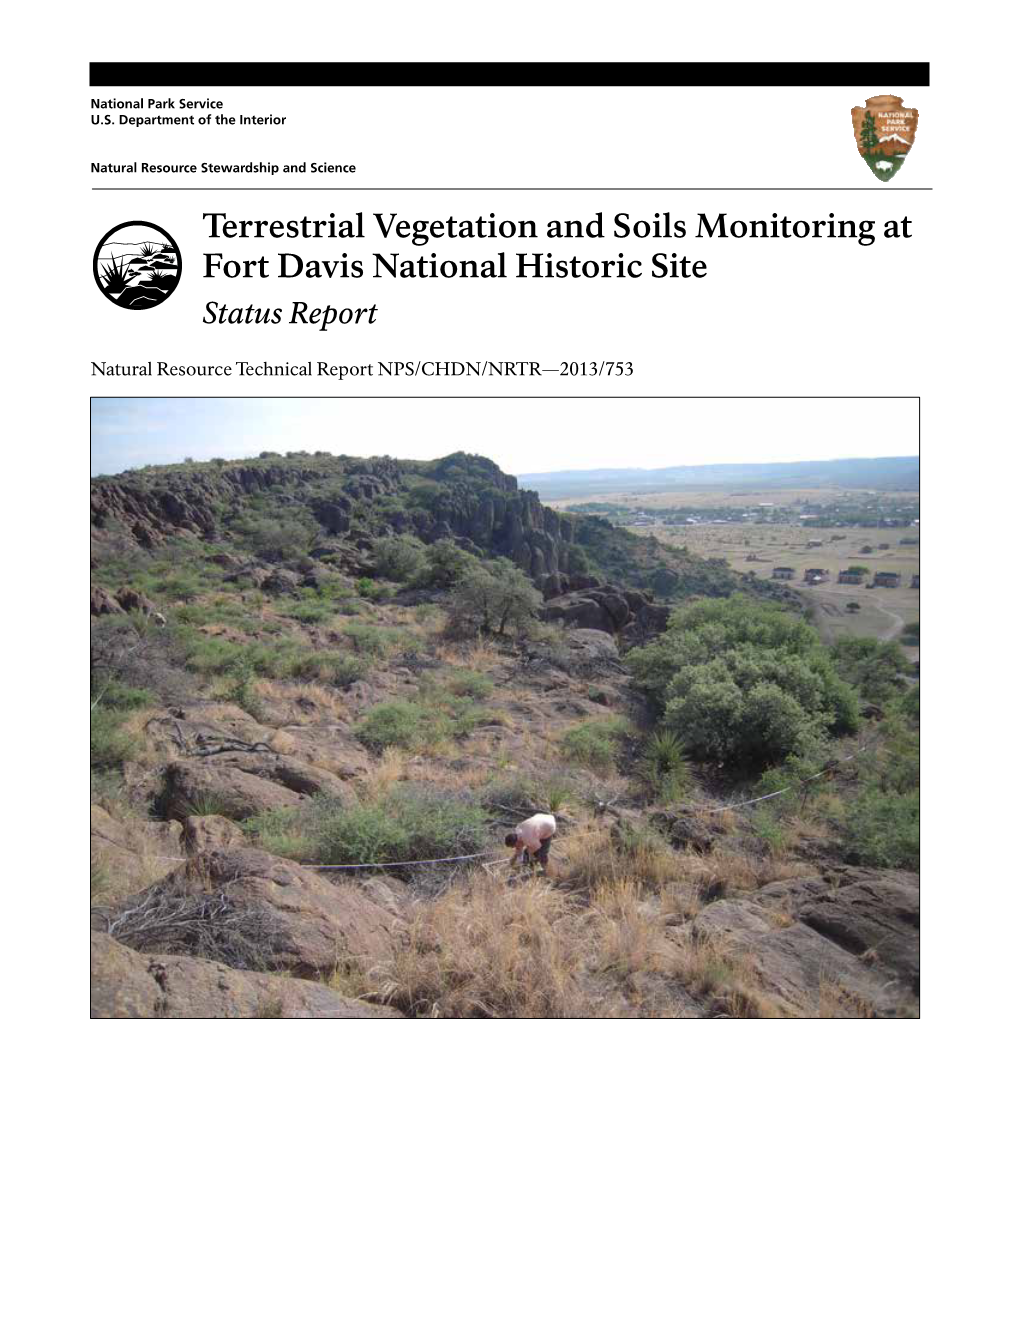 Terrestrial Vegetation and Soils Monitoring at Fort Davis National Historic Site Status Report